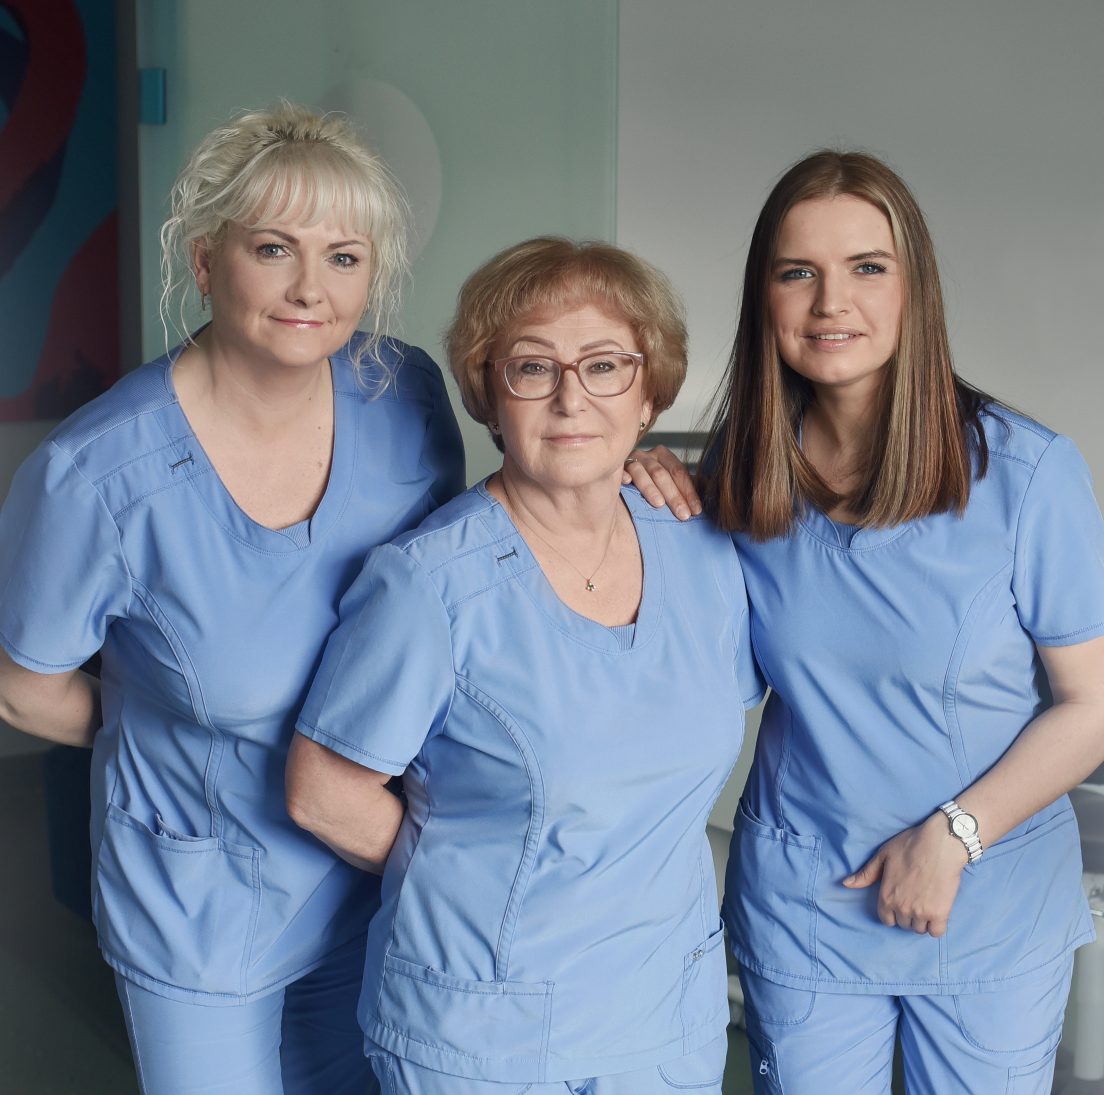 Geras odontologas komanda higienistė Ingrida anesteziologė Natalja ir burnos chirurgė Indrė